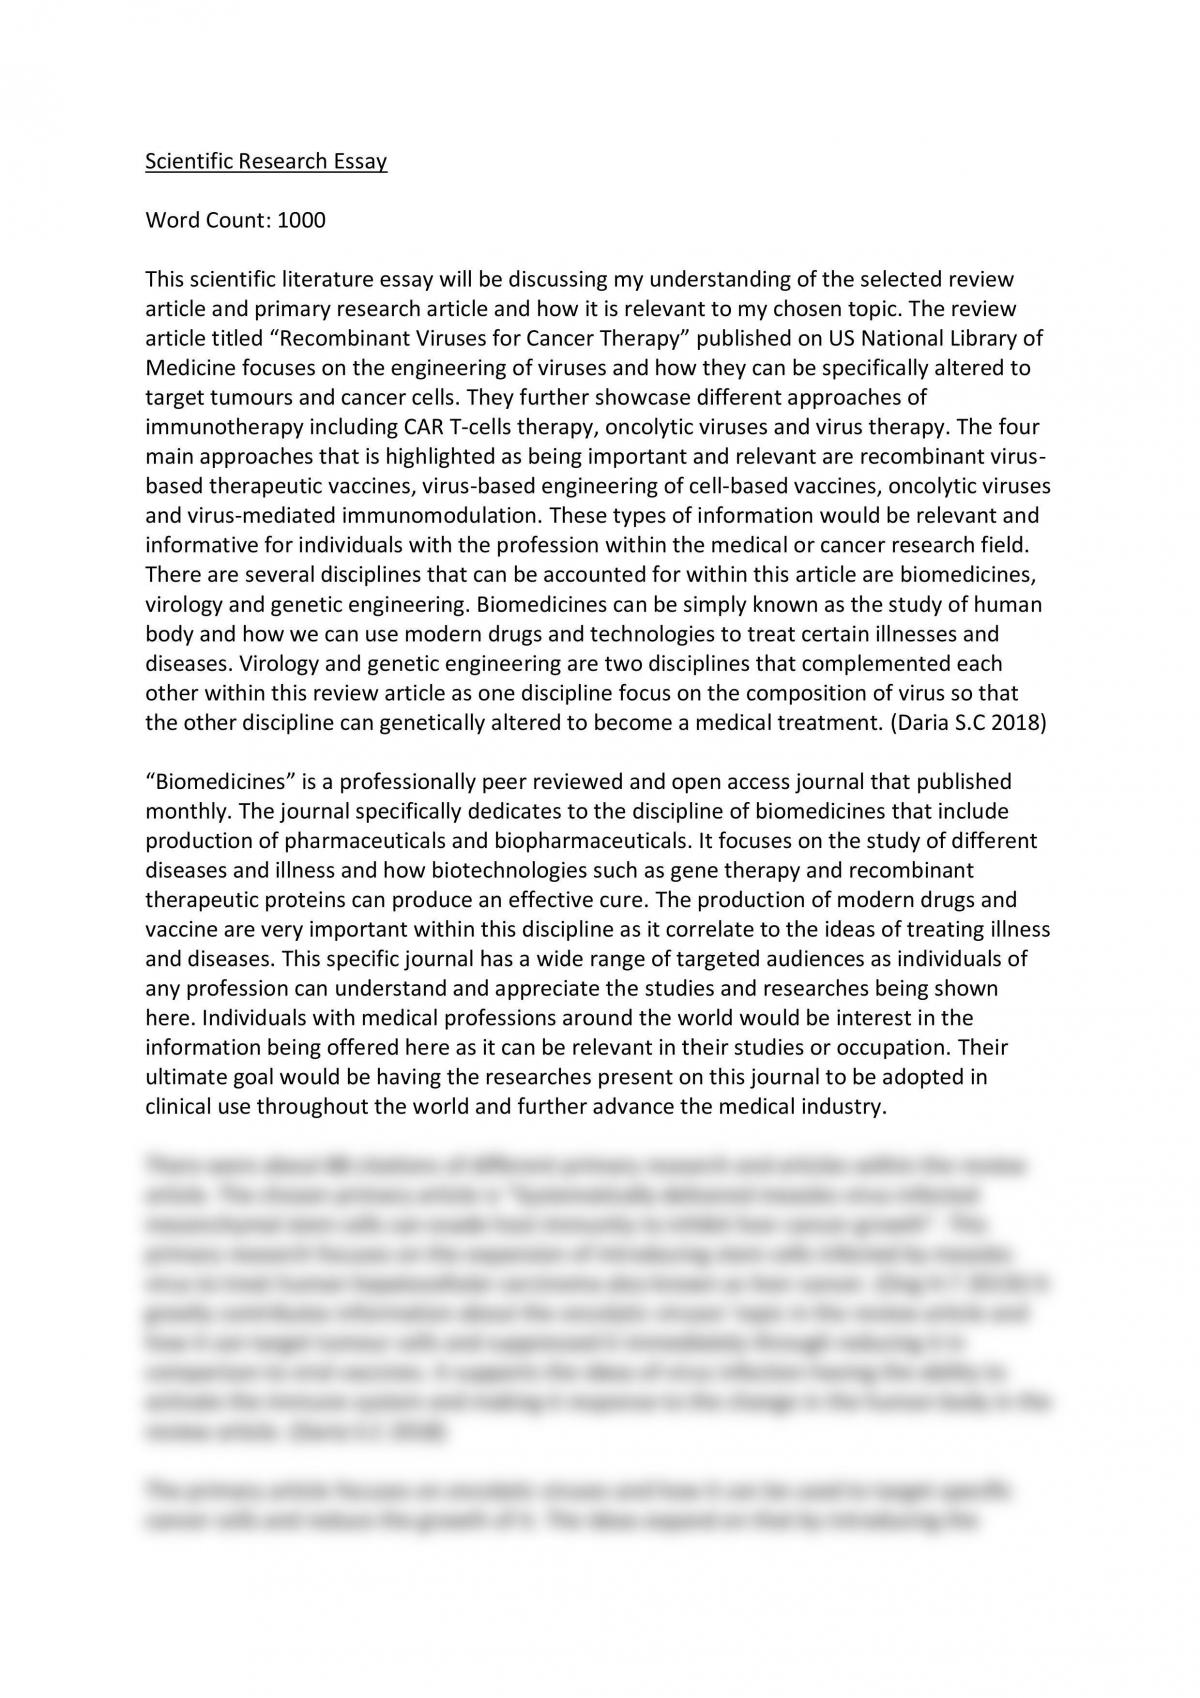 Scientific Literature Review Essay  - Page 1